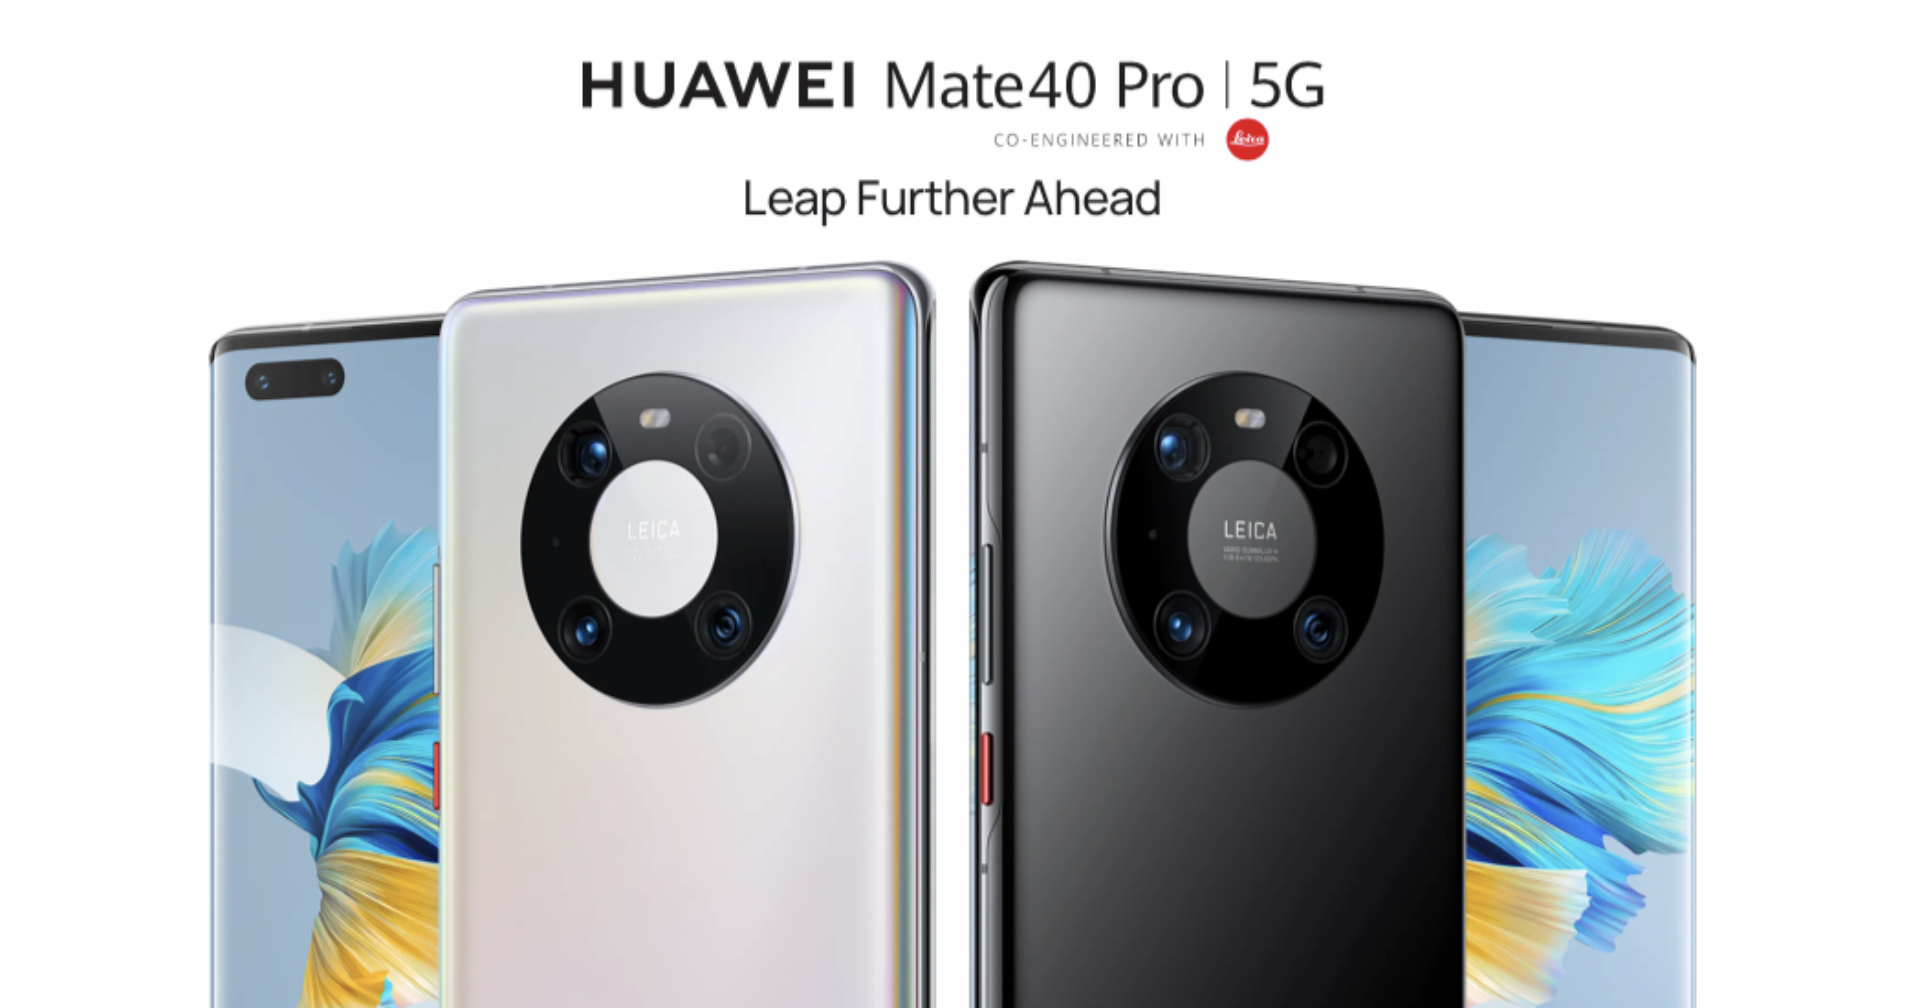 Huawei โดนหนัก เสียส่วนแบ่งสมาร์ตโฟนทั้งตลาดเรือธงและราคาถูก